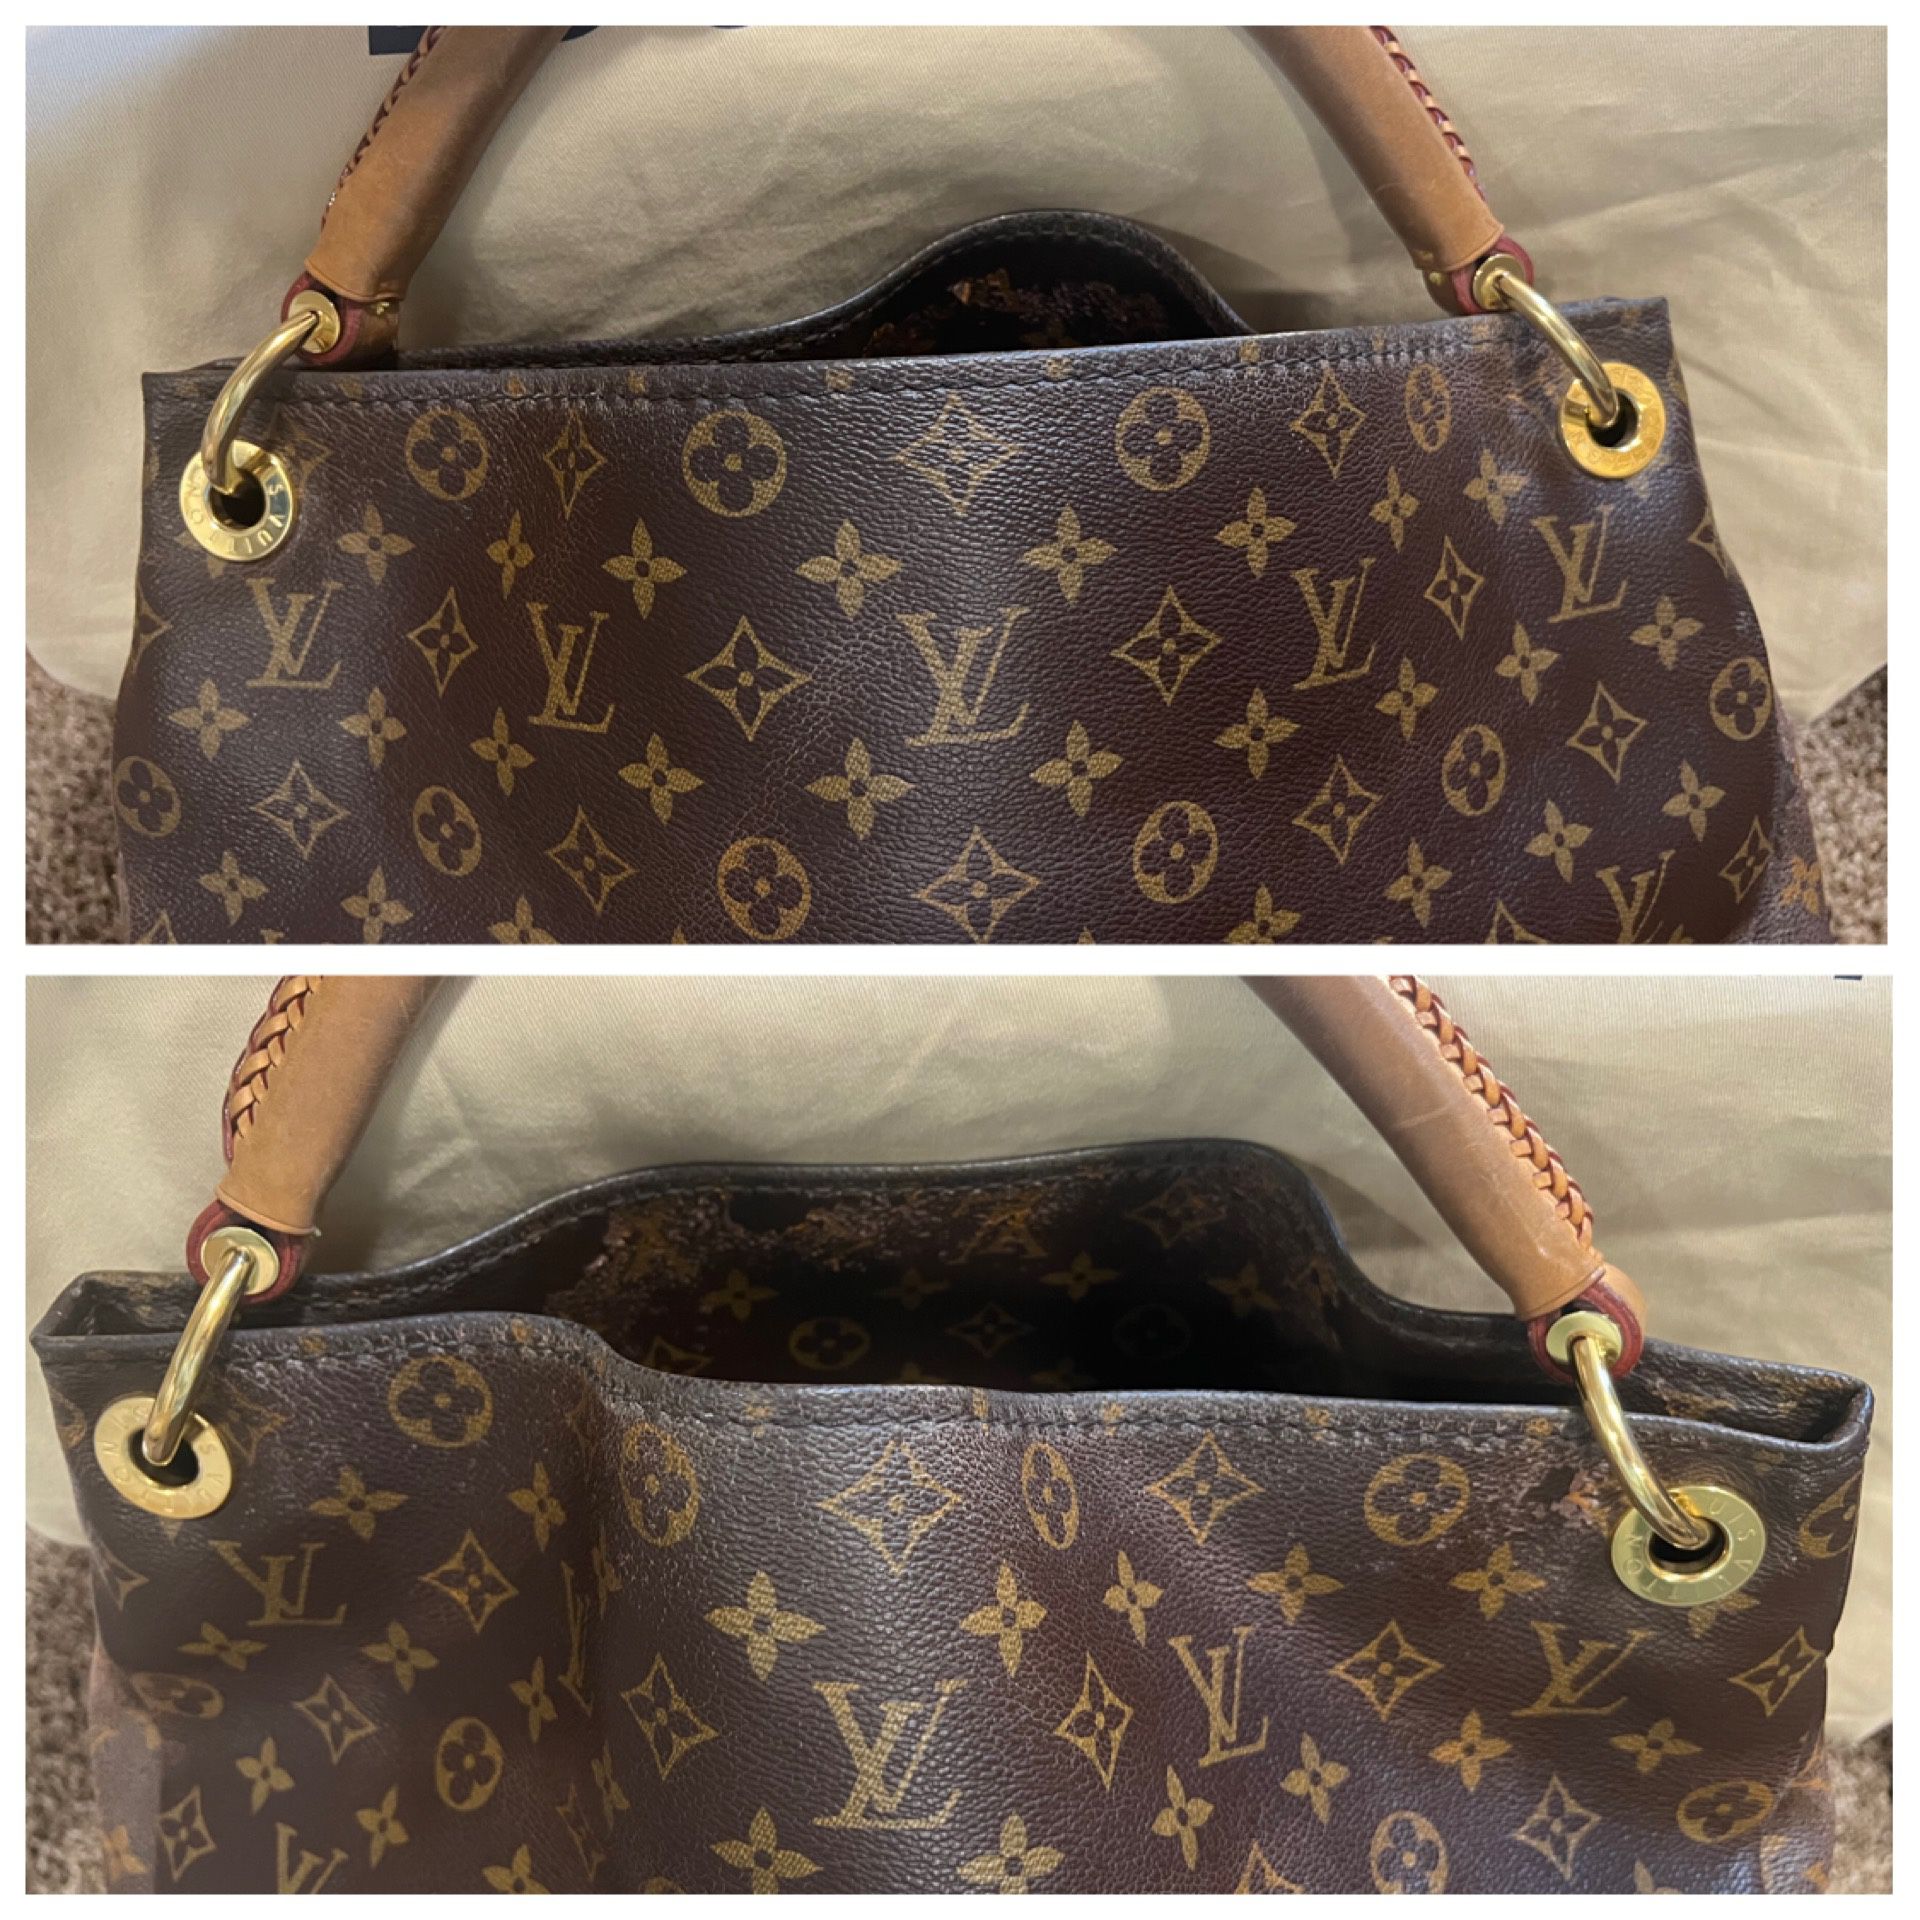 Louis Vuitton Artsy mm Handbag for Sale in Midlothian, TX - OfferUp